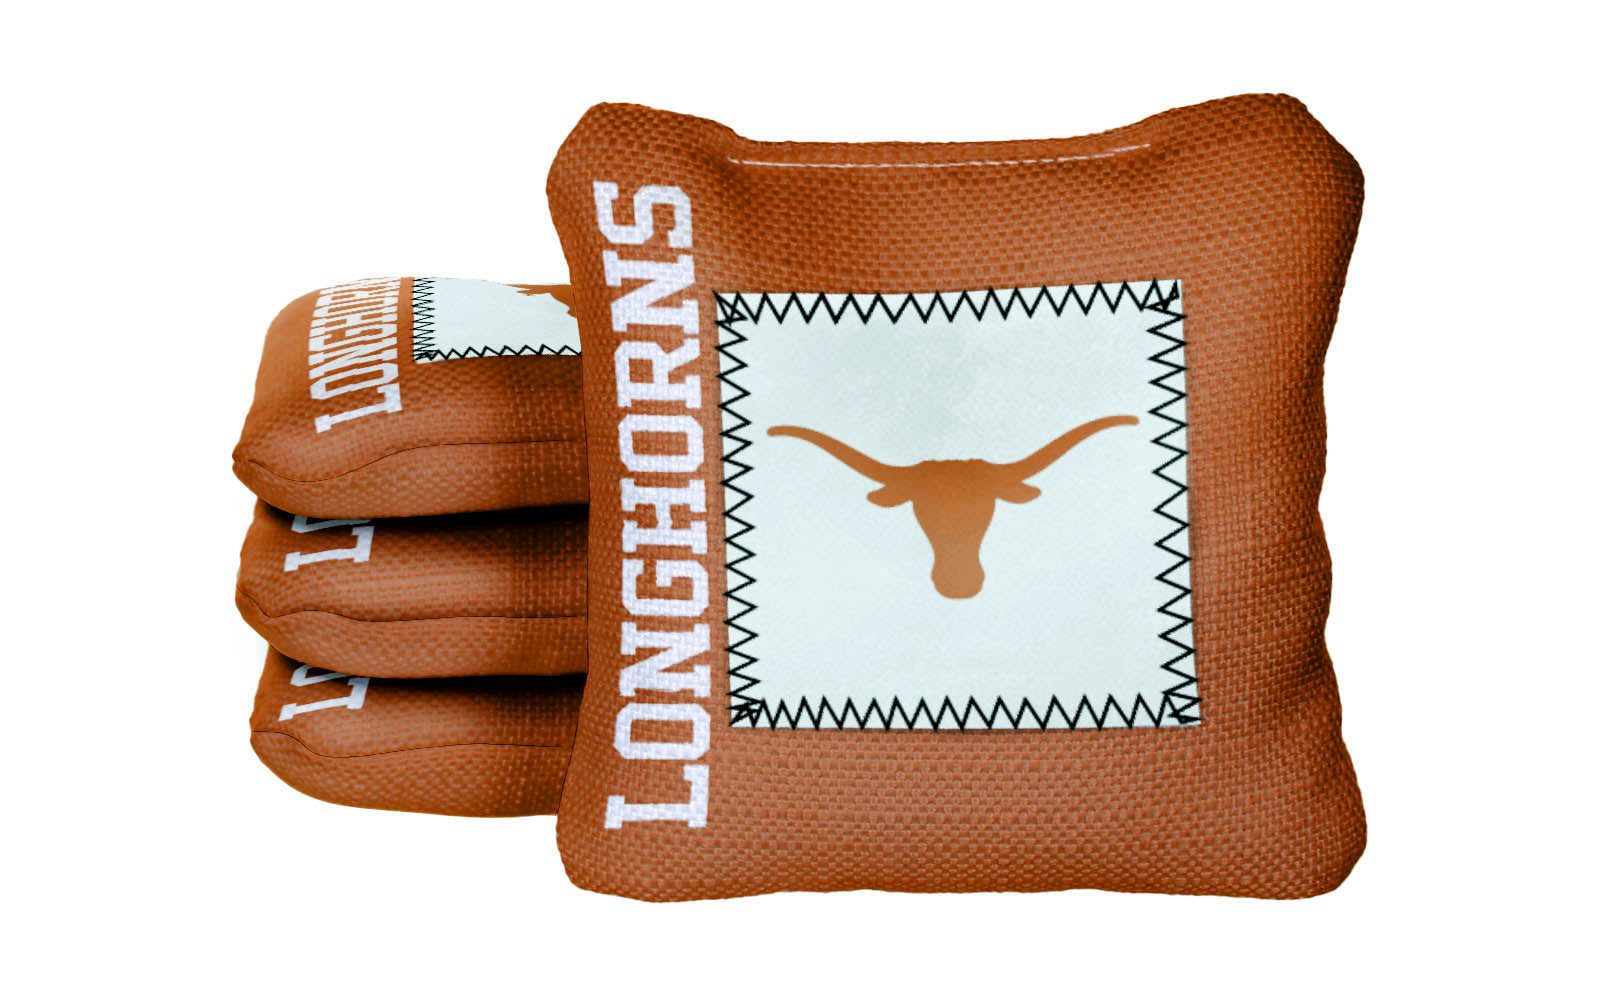 Officially Licensed Collegiate Cornhole Bags - Gamechanger - Set of 4 - University of Texas